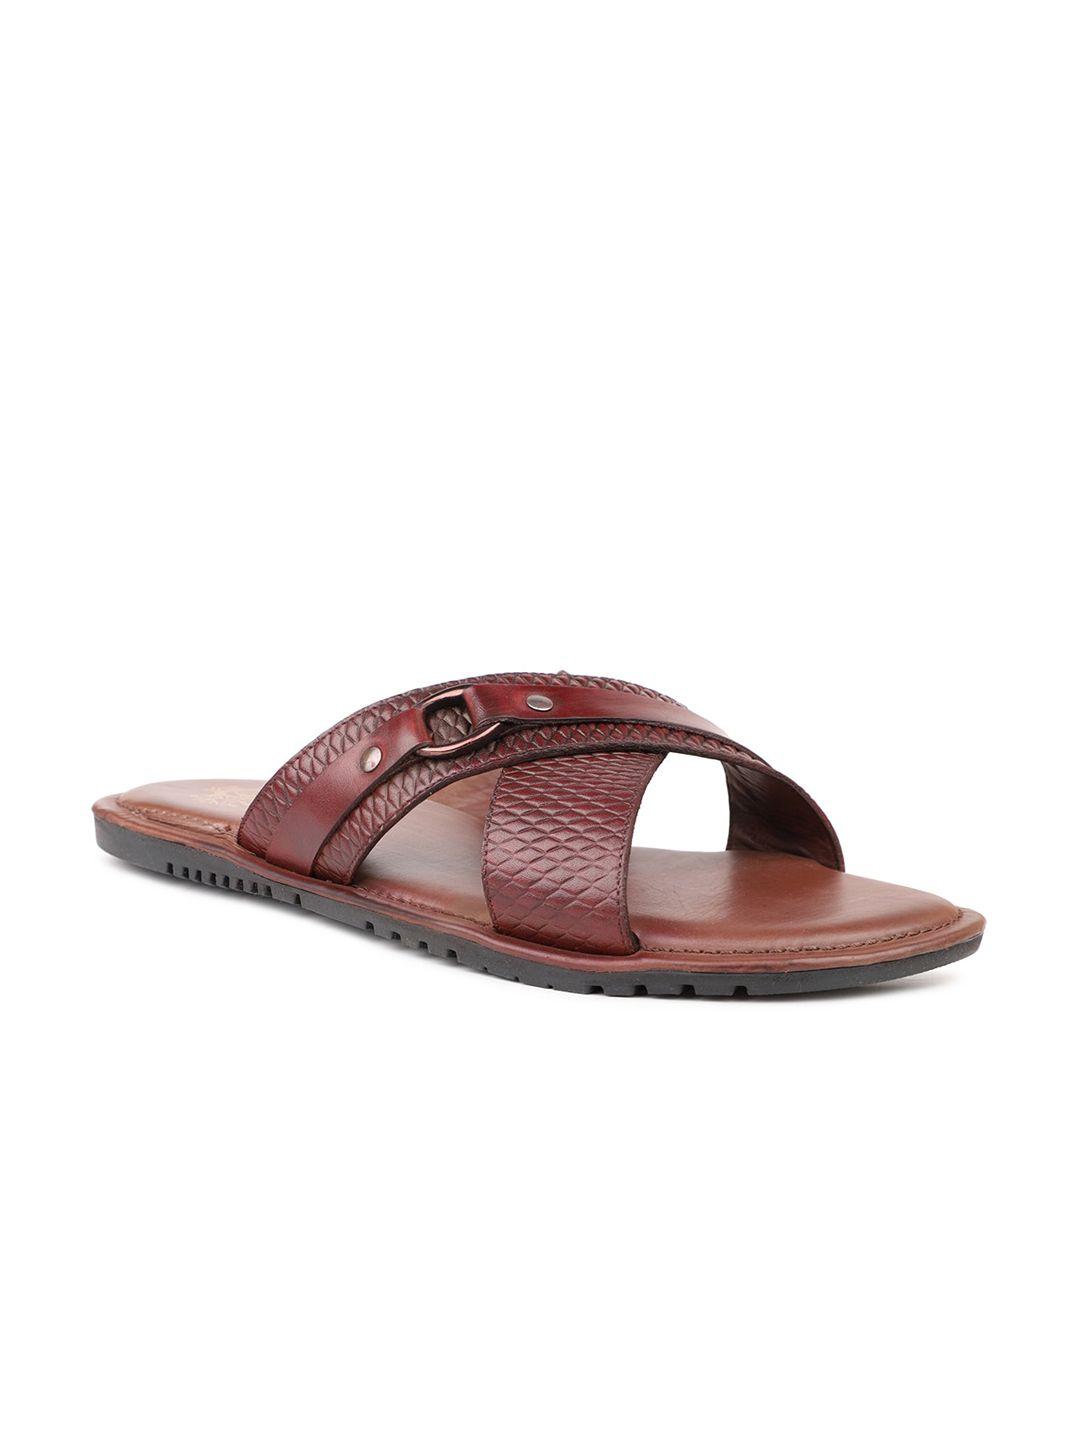 atesber leather comfort sandals